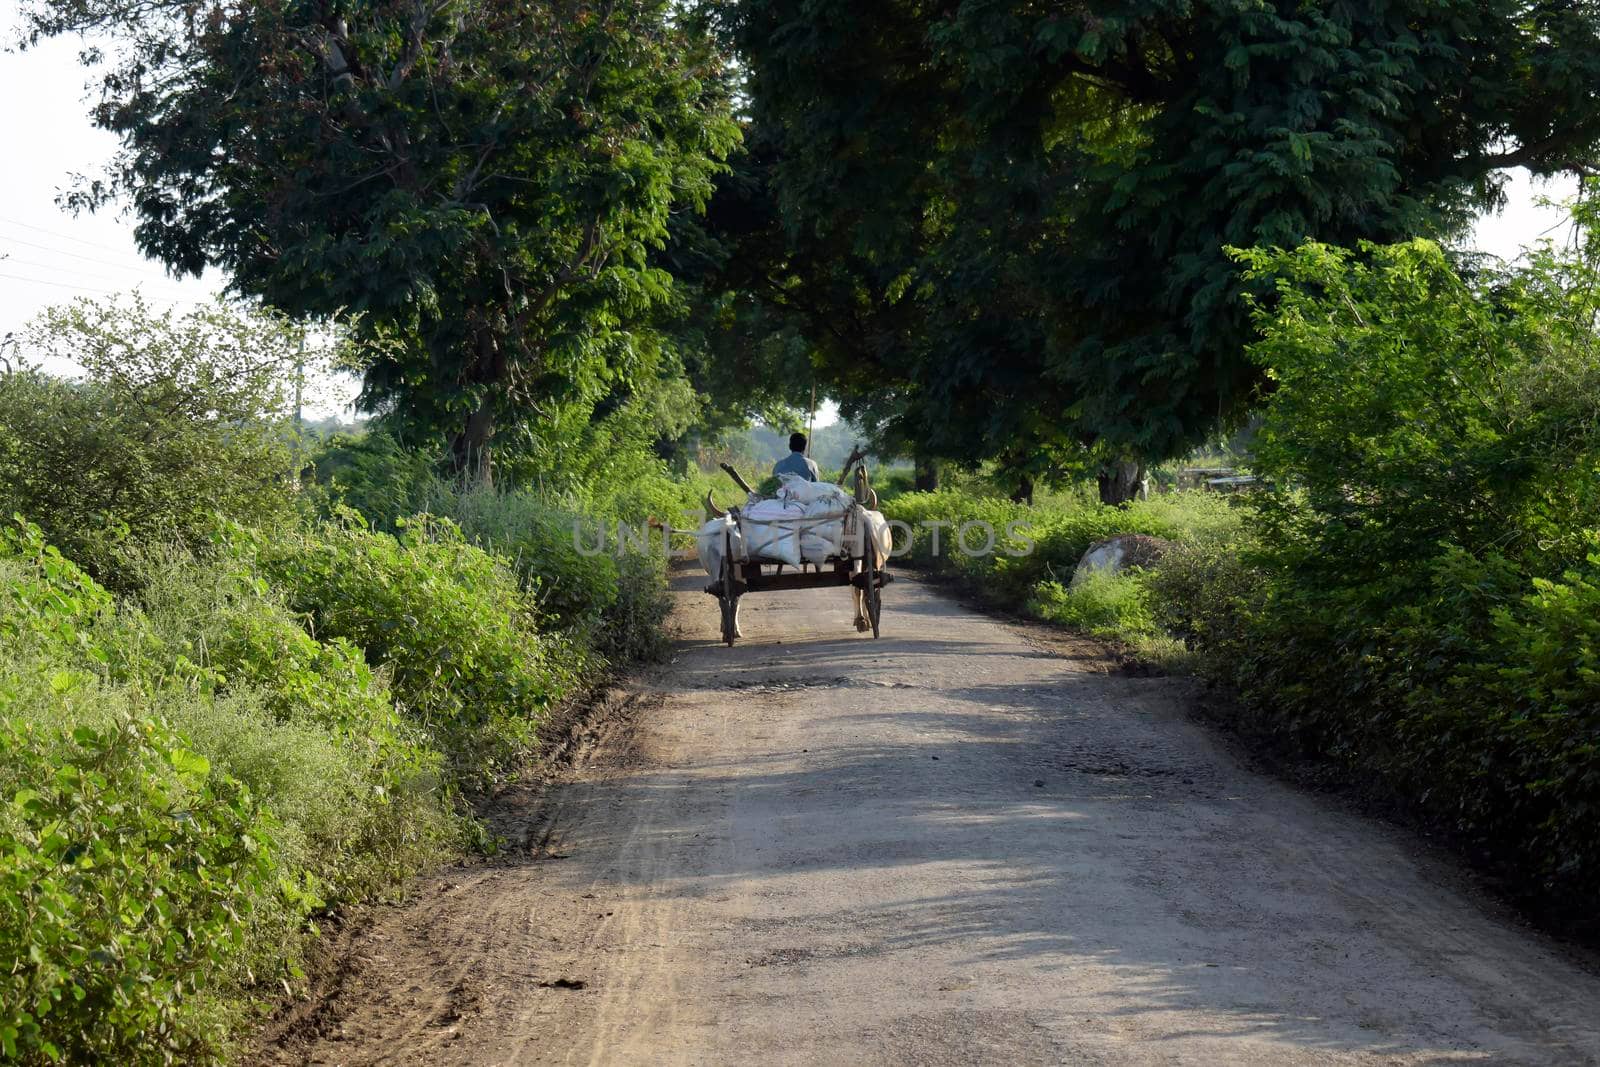 Bhusawal, Maharashtra / India - Feb 13, 2021: Indian farmer riding bullock cart, rural village, waghur Maharashtra, India., View of a carriage with white sacks on a narrow rural road by tabishere